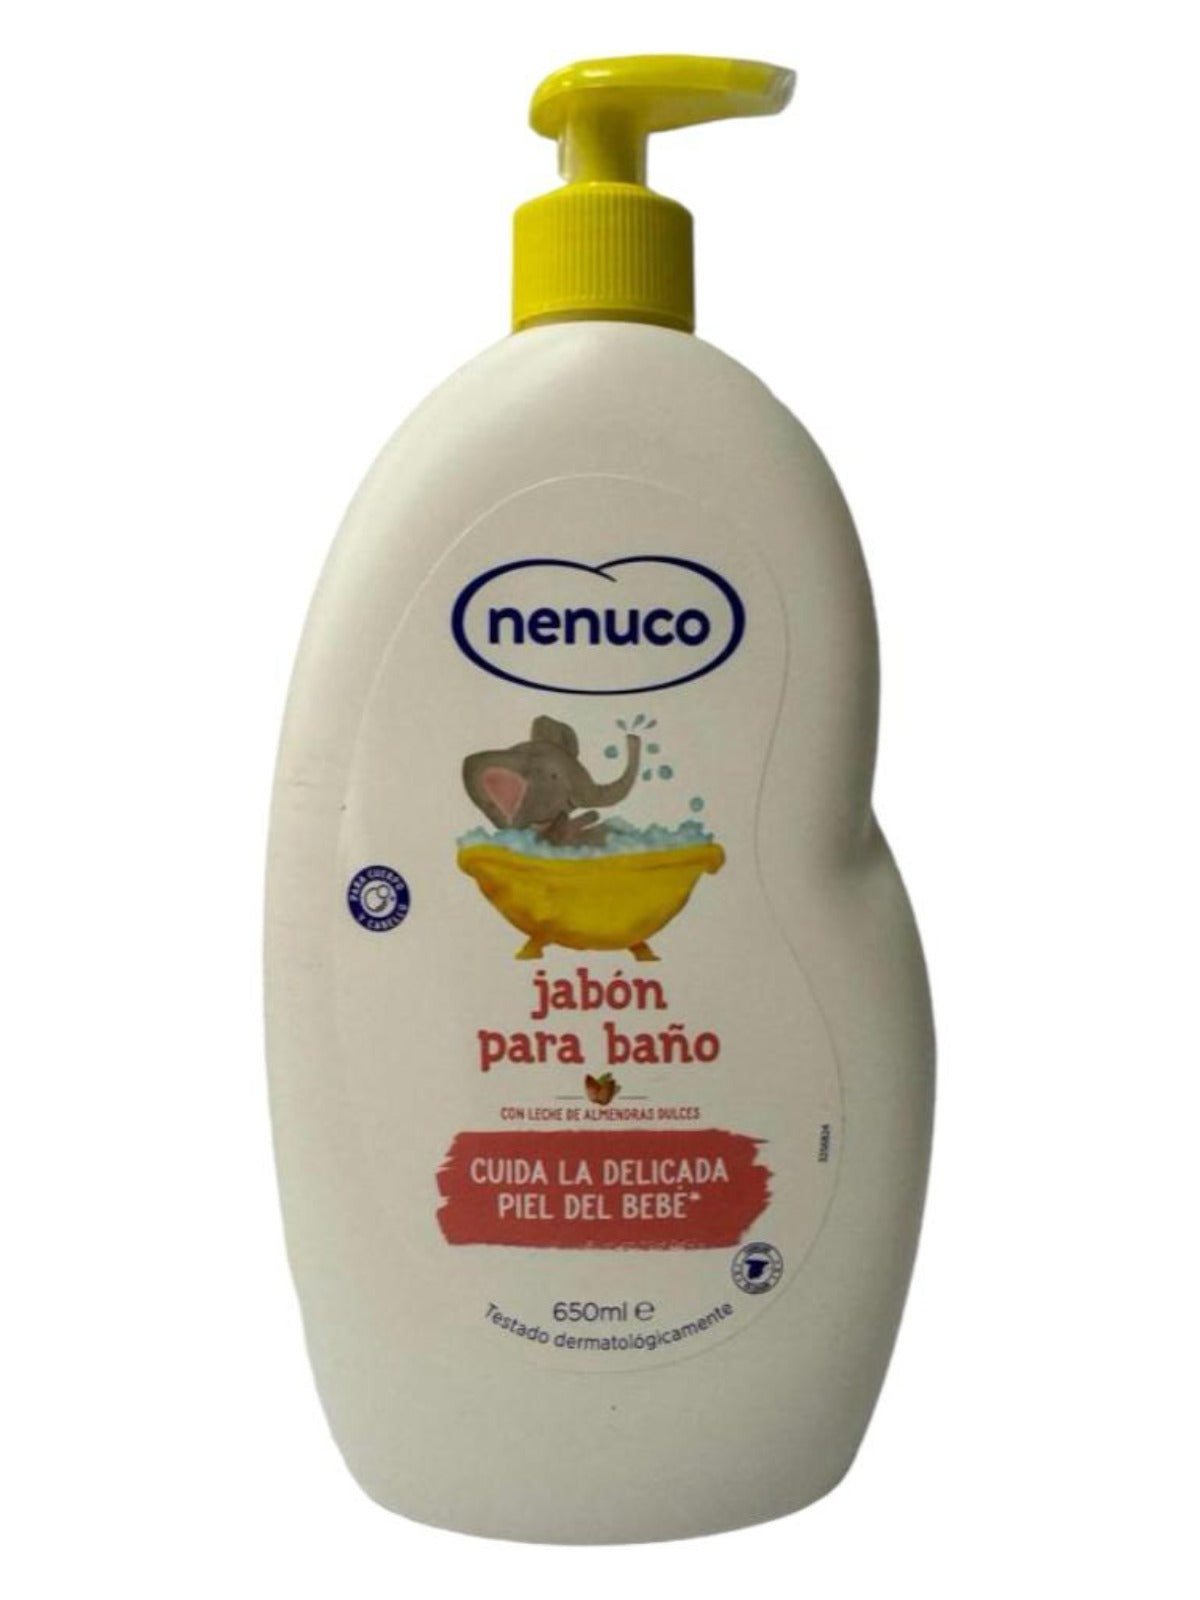 Nenuco Spanish Baby Bath Soap With Sweet Almond Milk 650ml